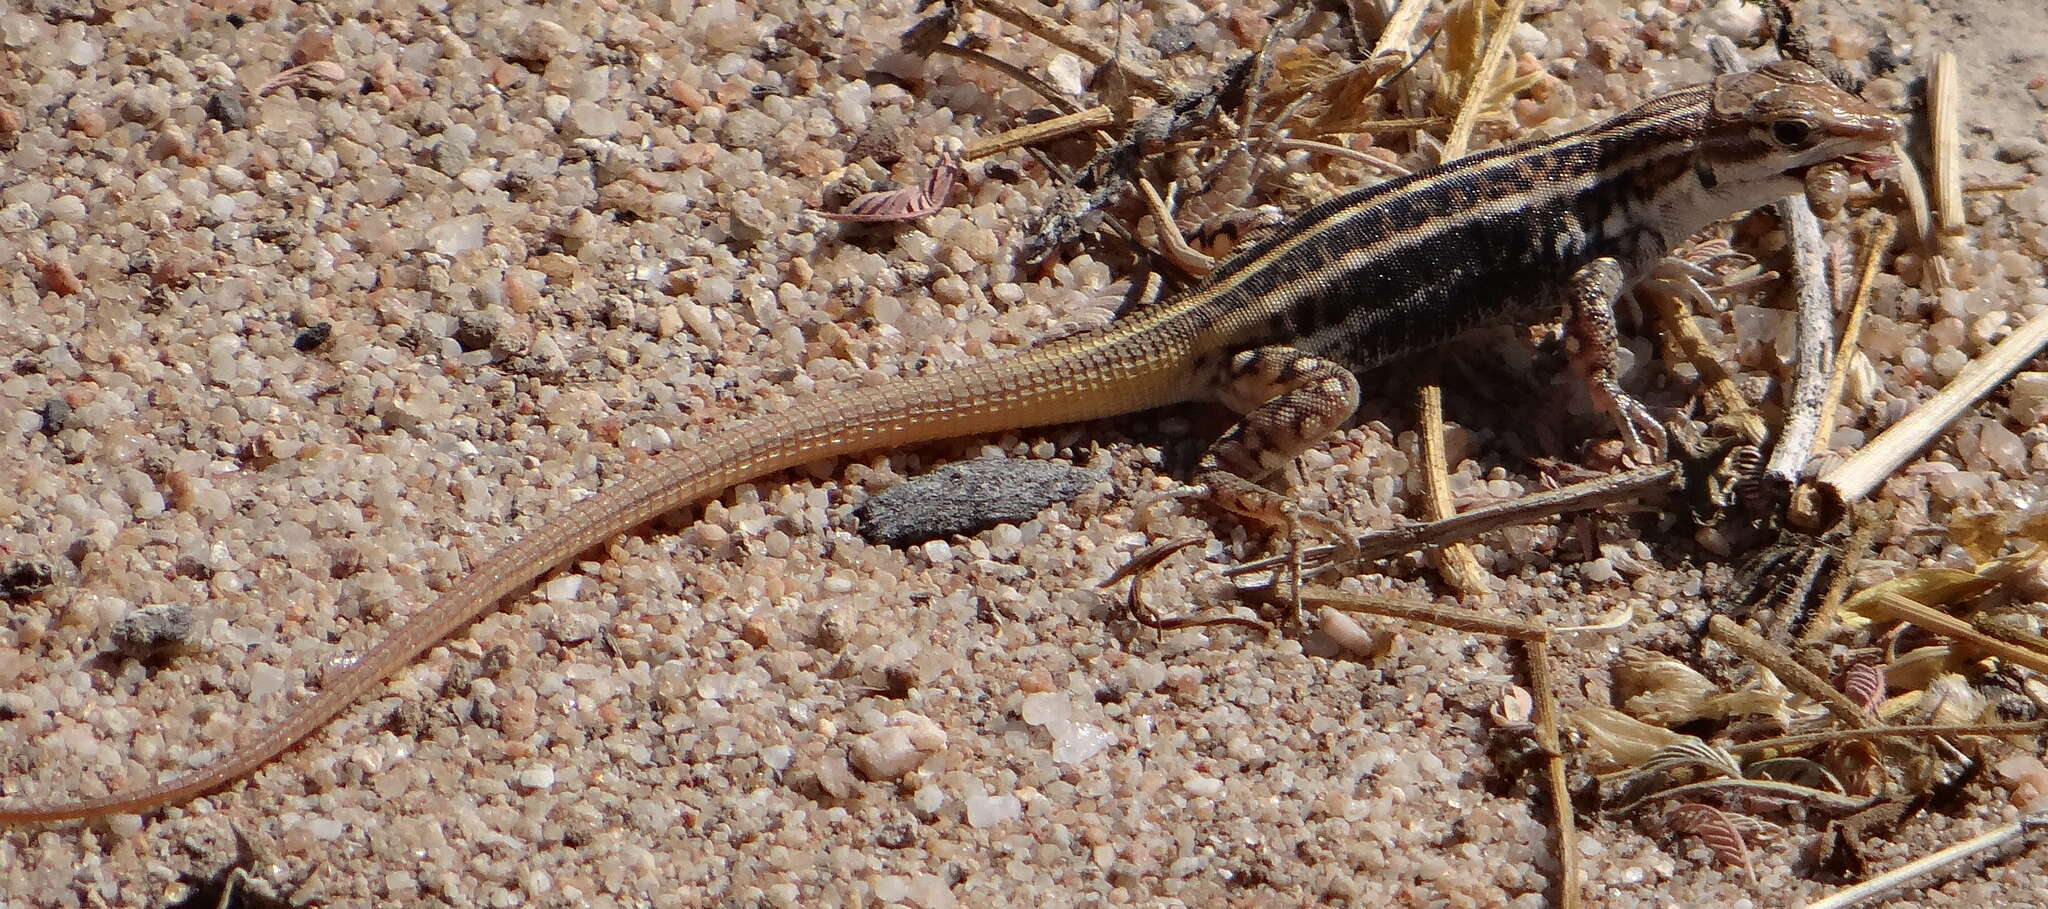 Image of Bushveld Lizard